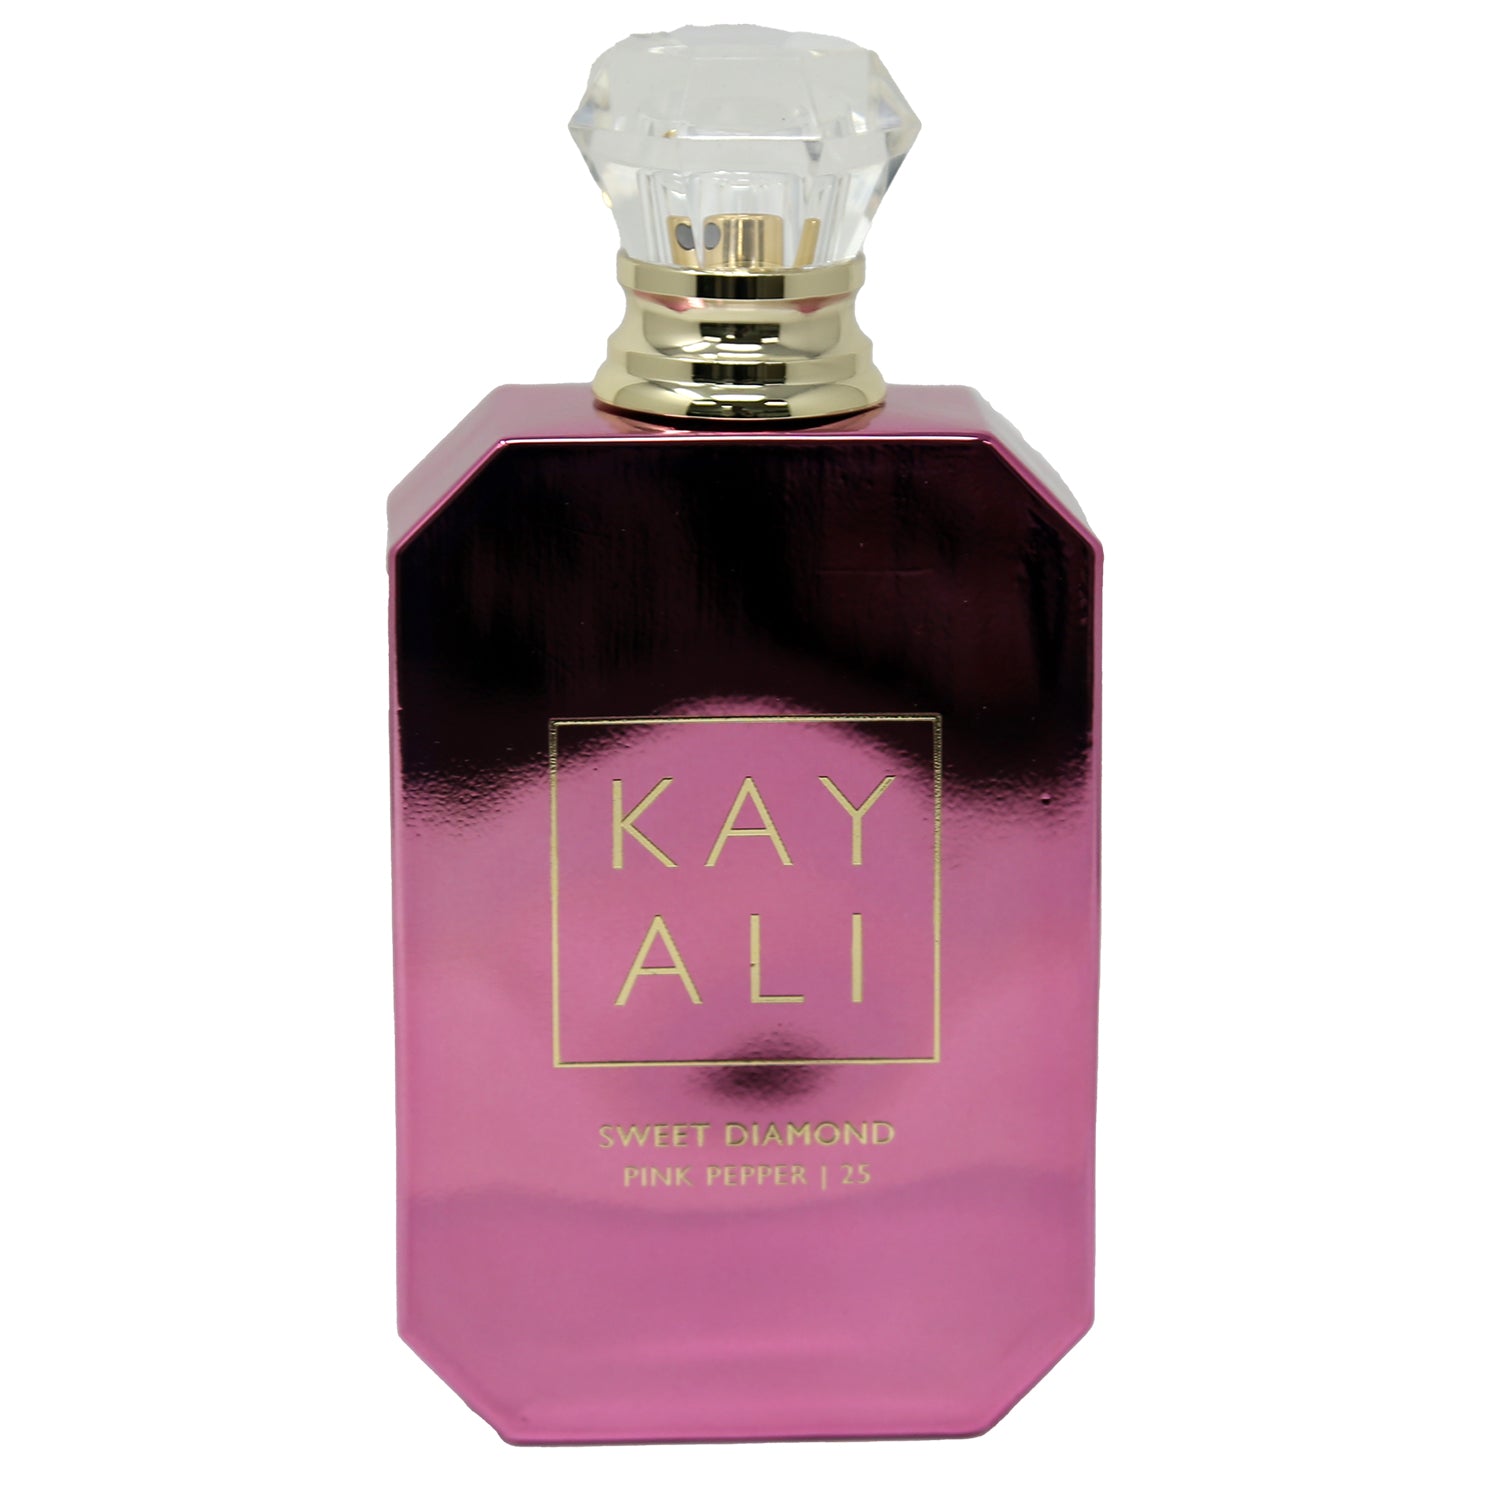 Sweet Diamond Pink Pepper 25 Intense by Kayali Fragrance Samples